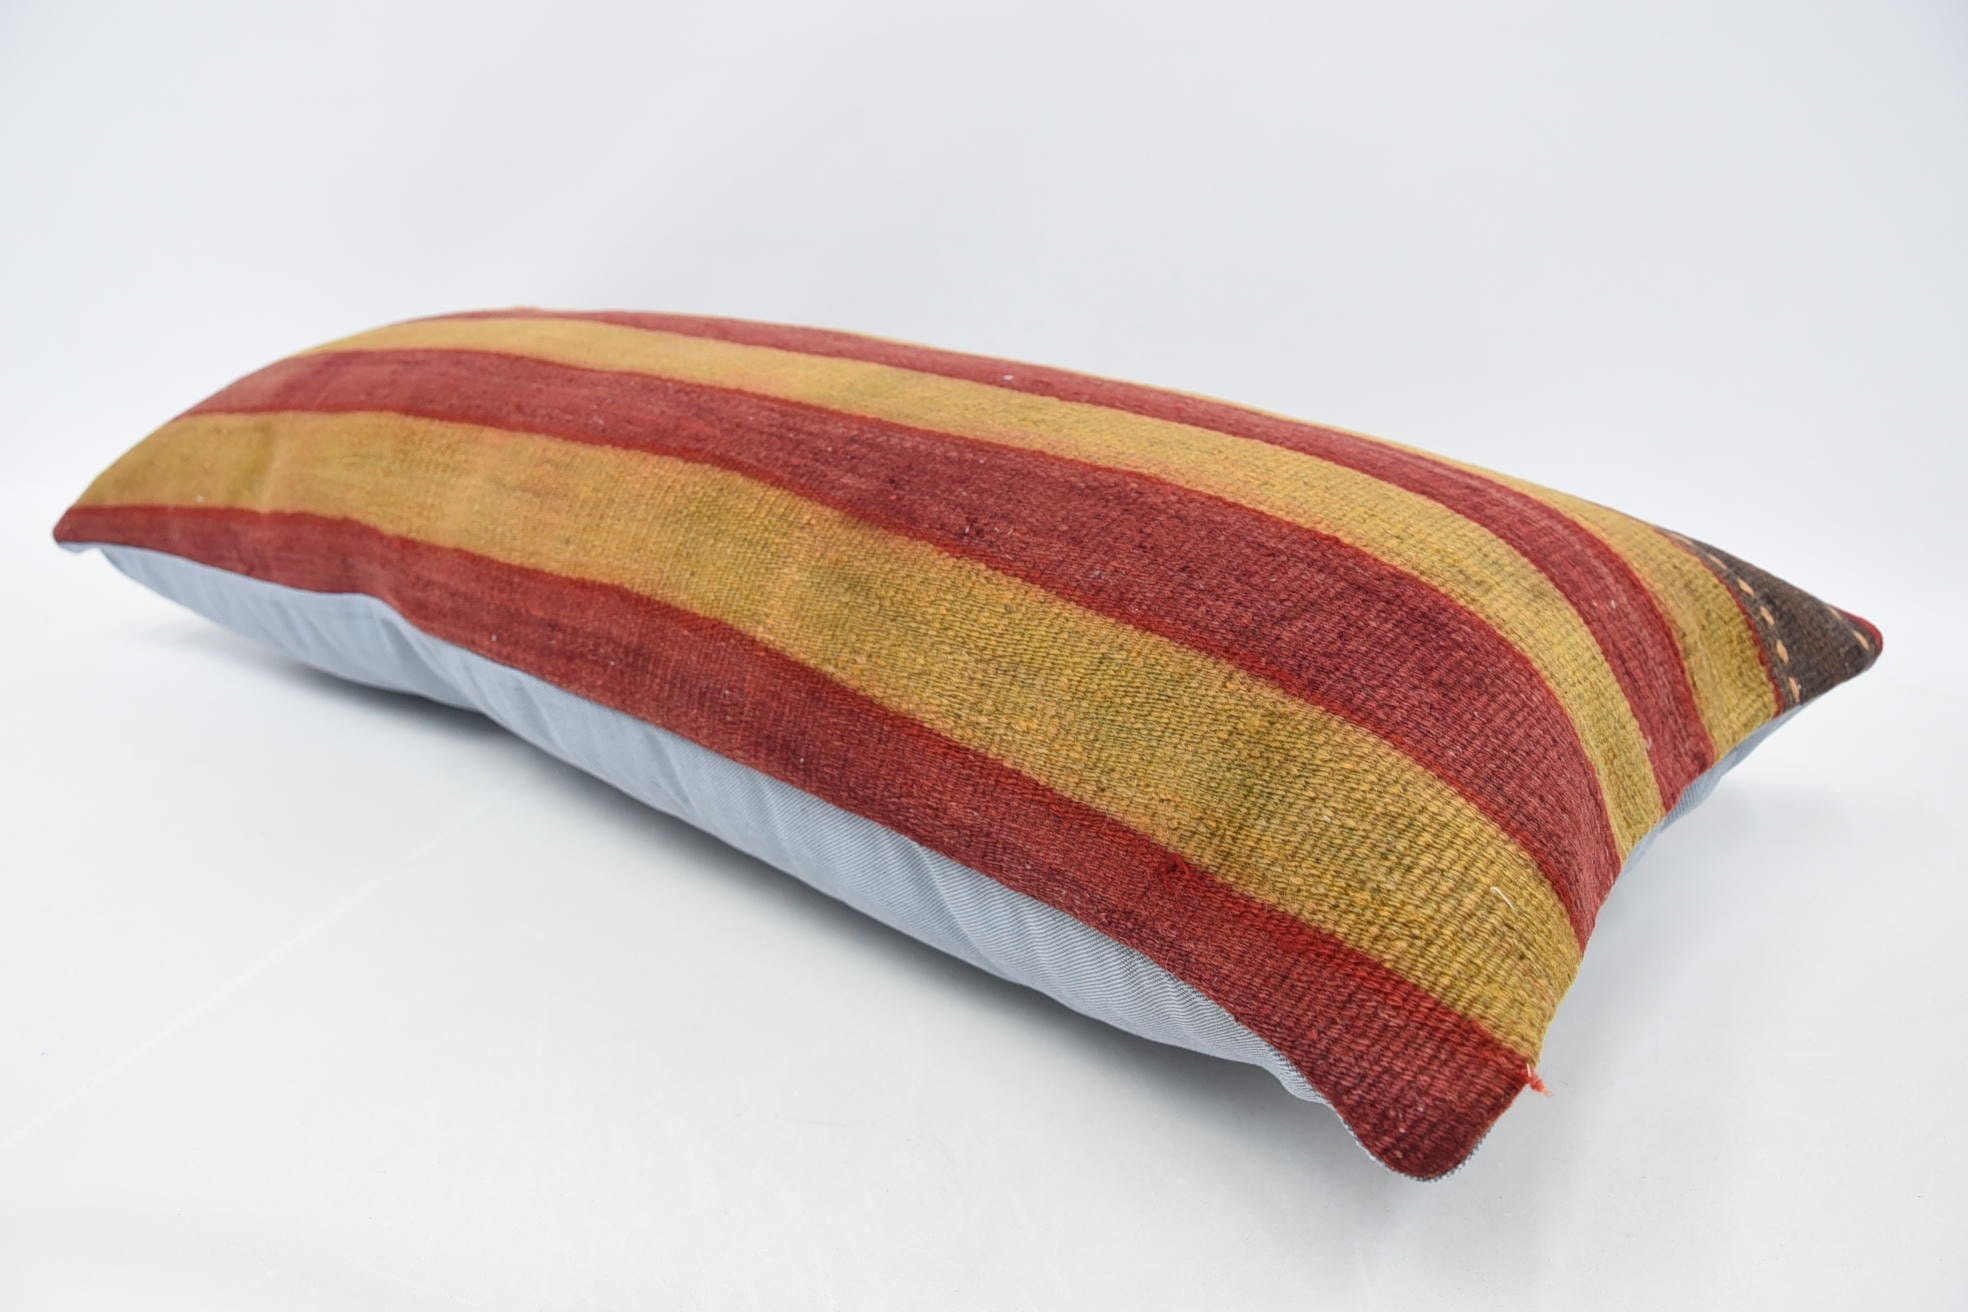 16"x36" Red Cushion, Throw Kilim Pillow, Boho Pillow, Antique Pillows, Decorative Throw Pillow Cover, Bolster Throw Pillow Cover